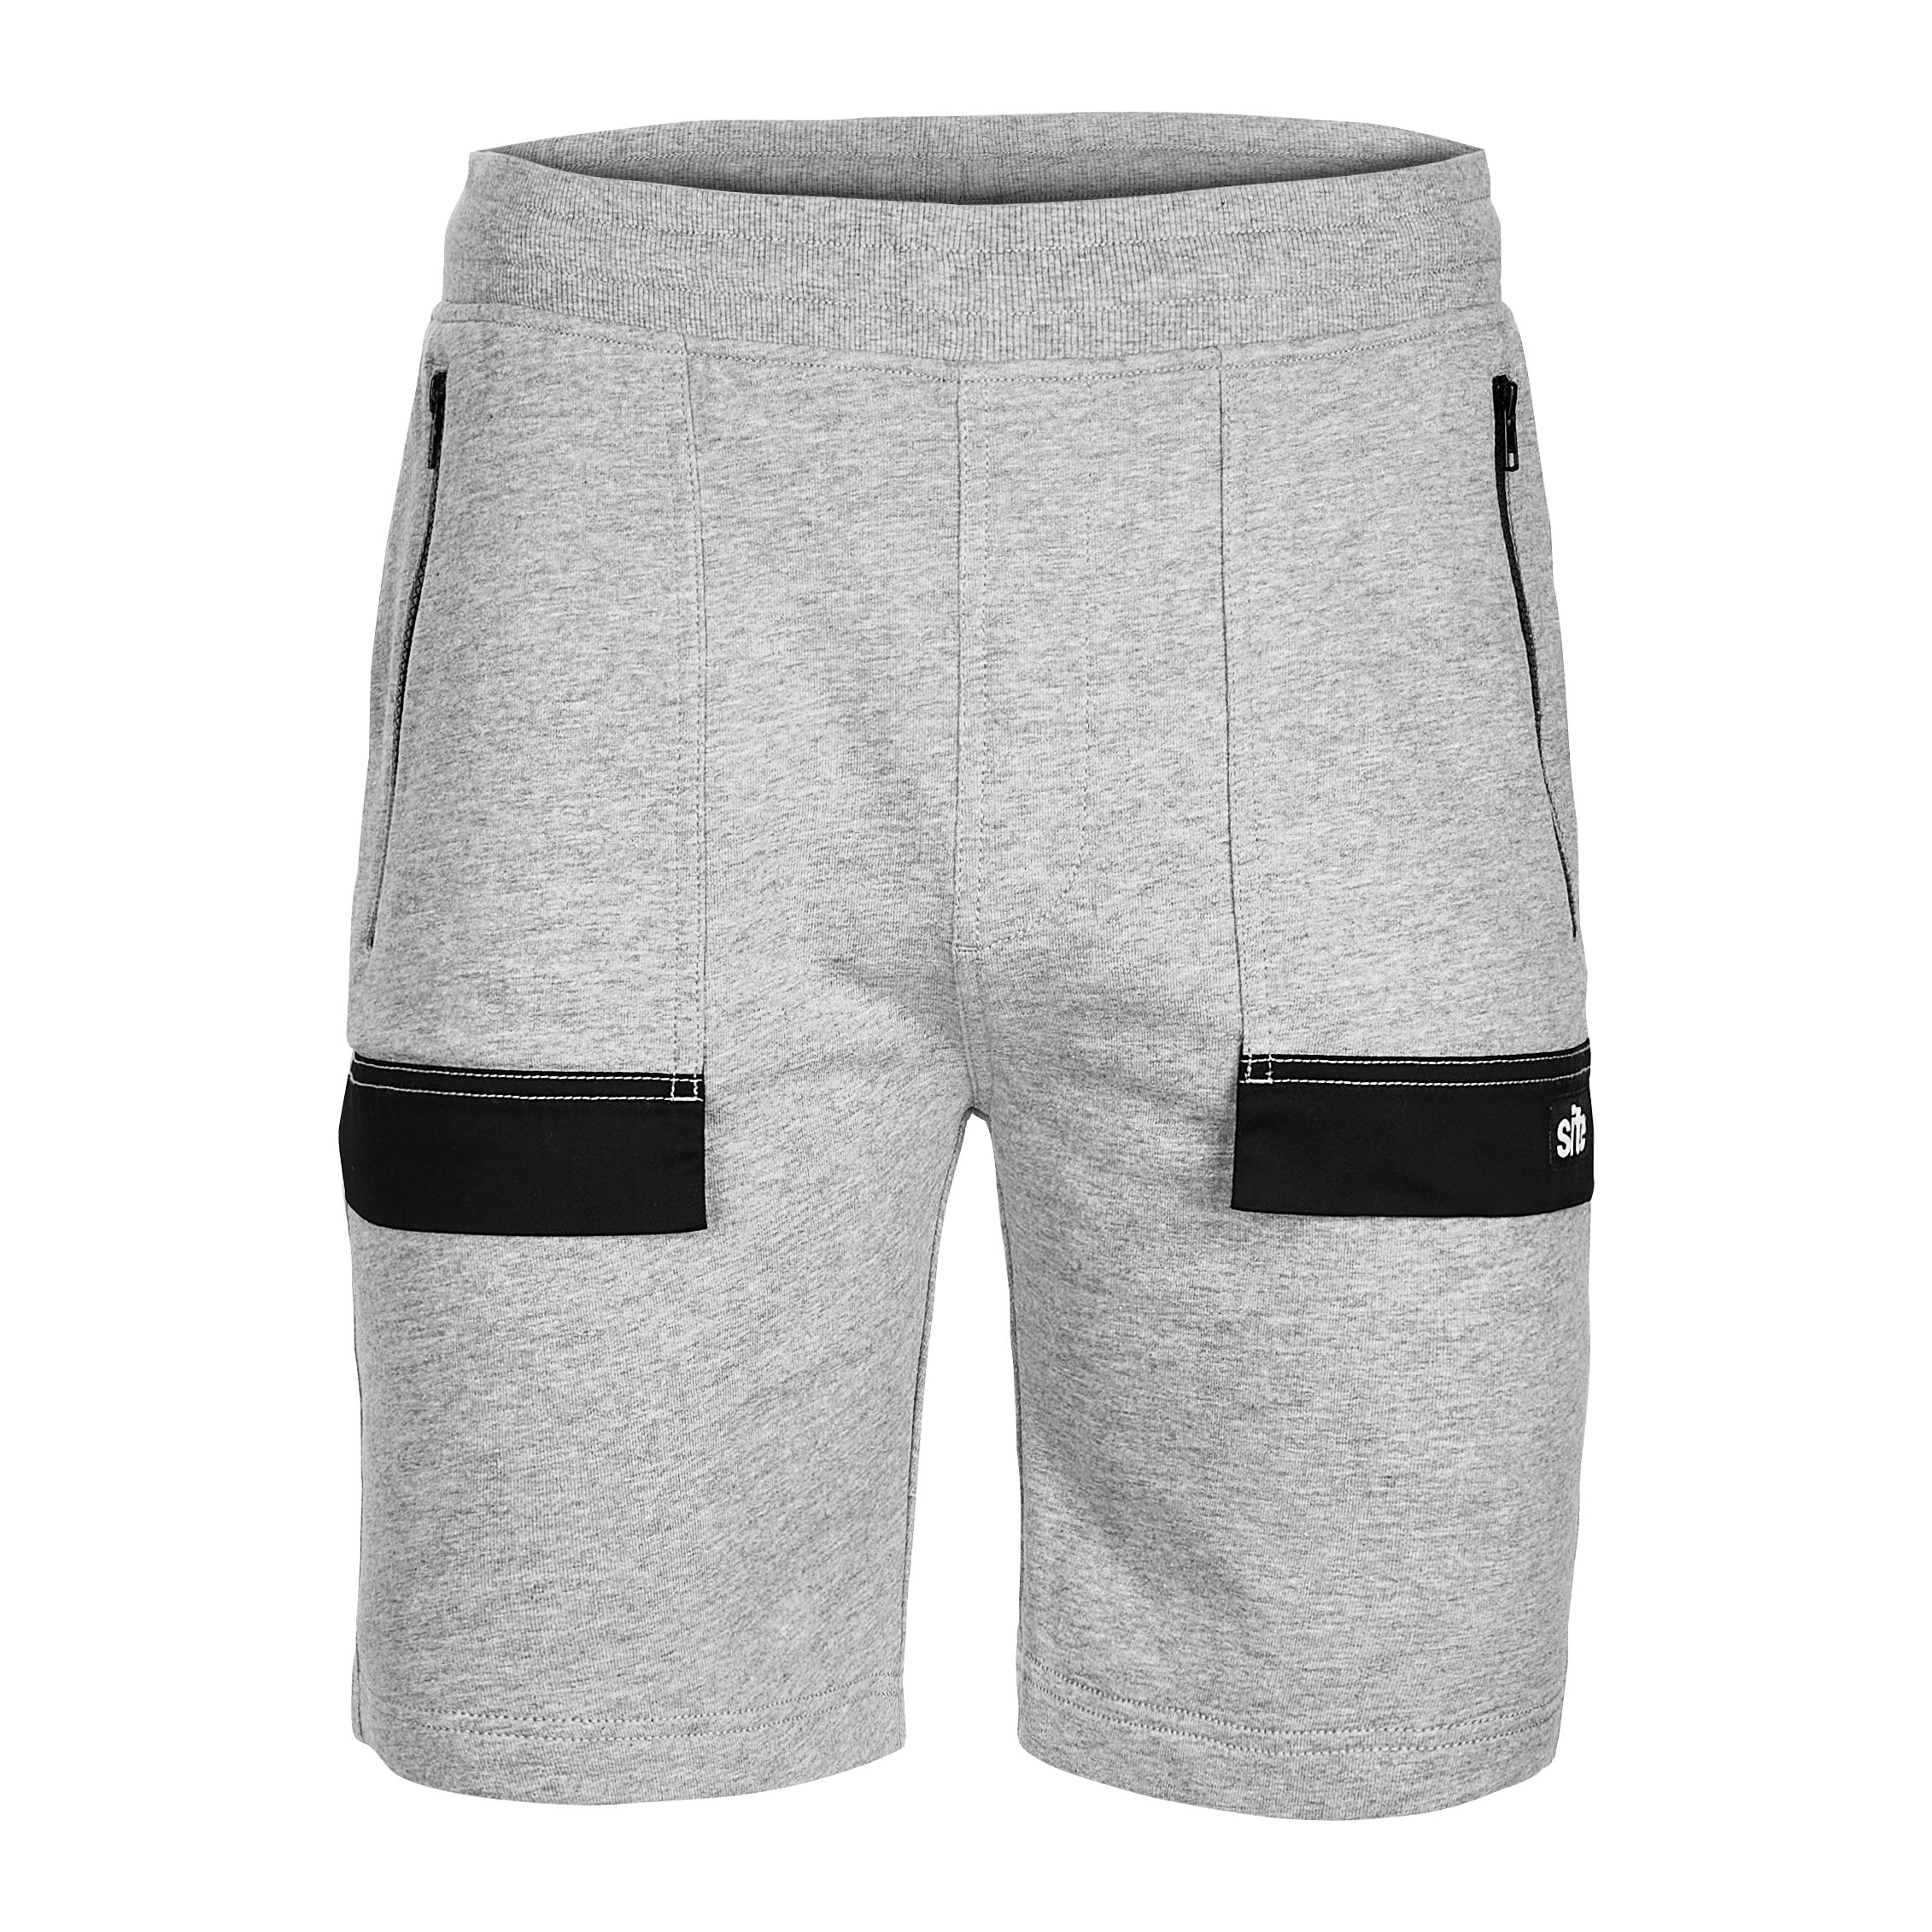 Site Malamute Grey Shorts, Medium